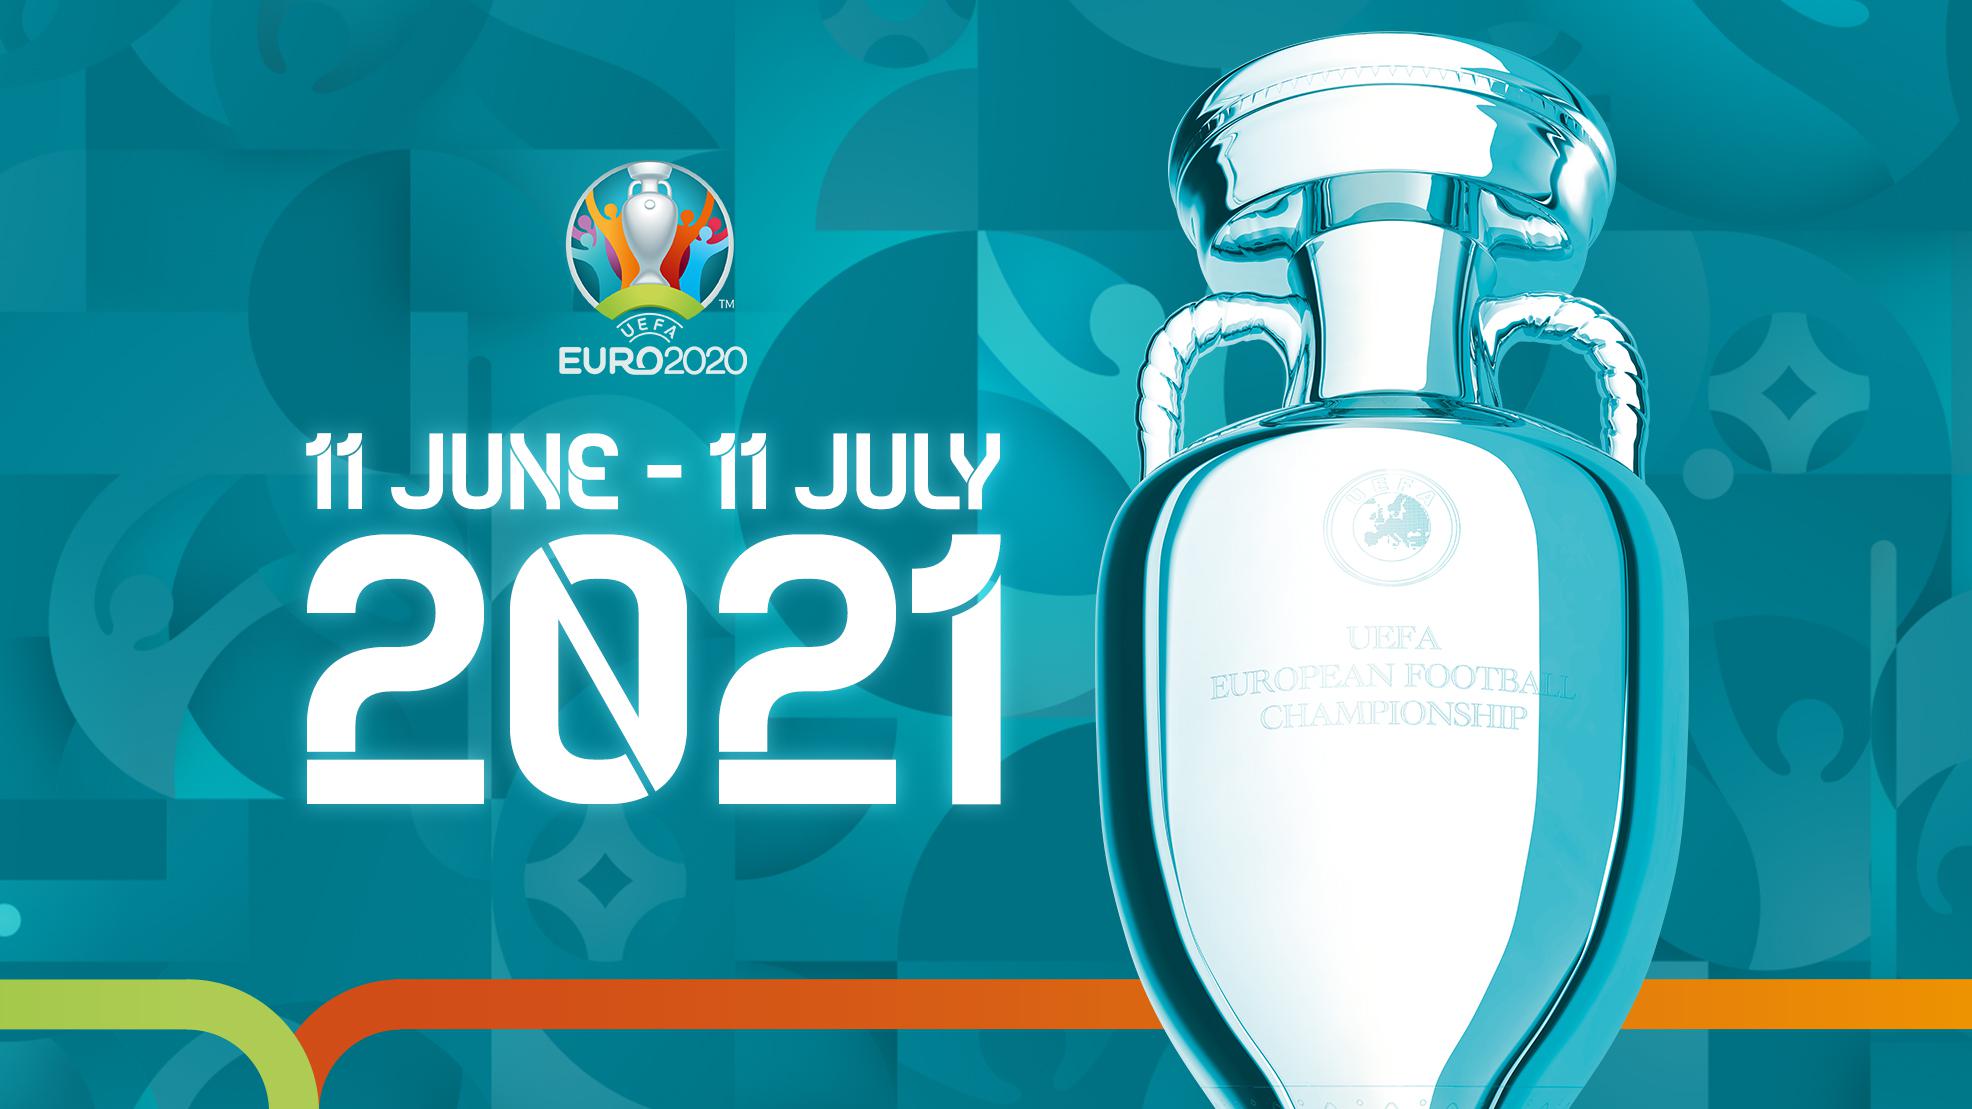 Фавориты предстоящего Евро 2020 по футболу